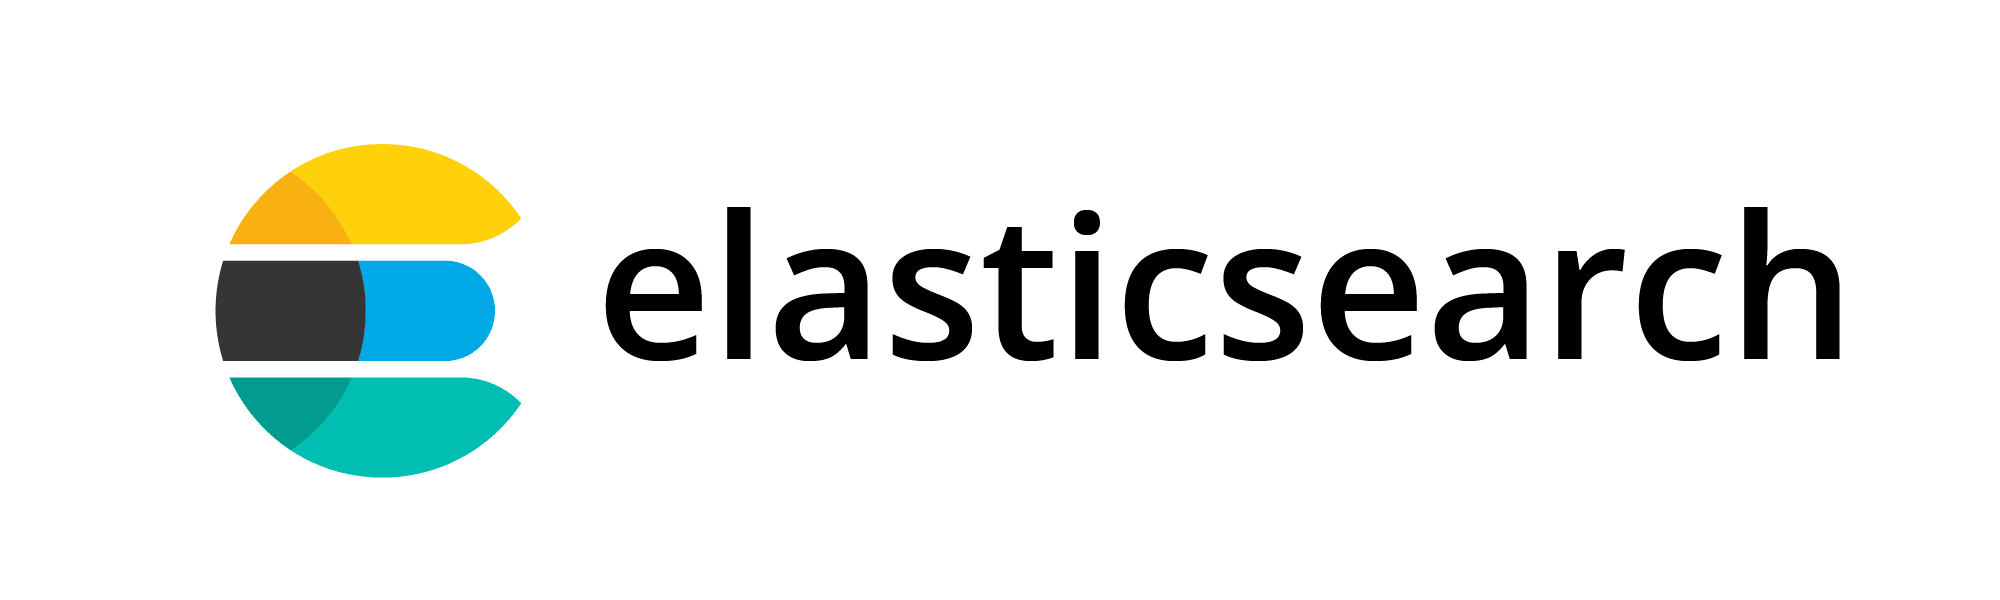 The Elasticsearch logo